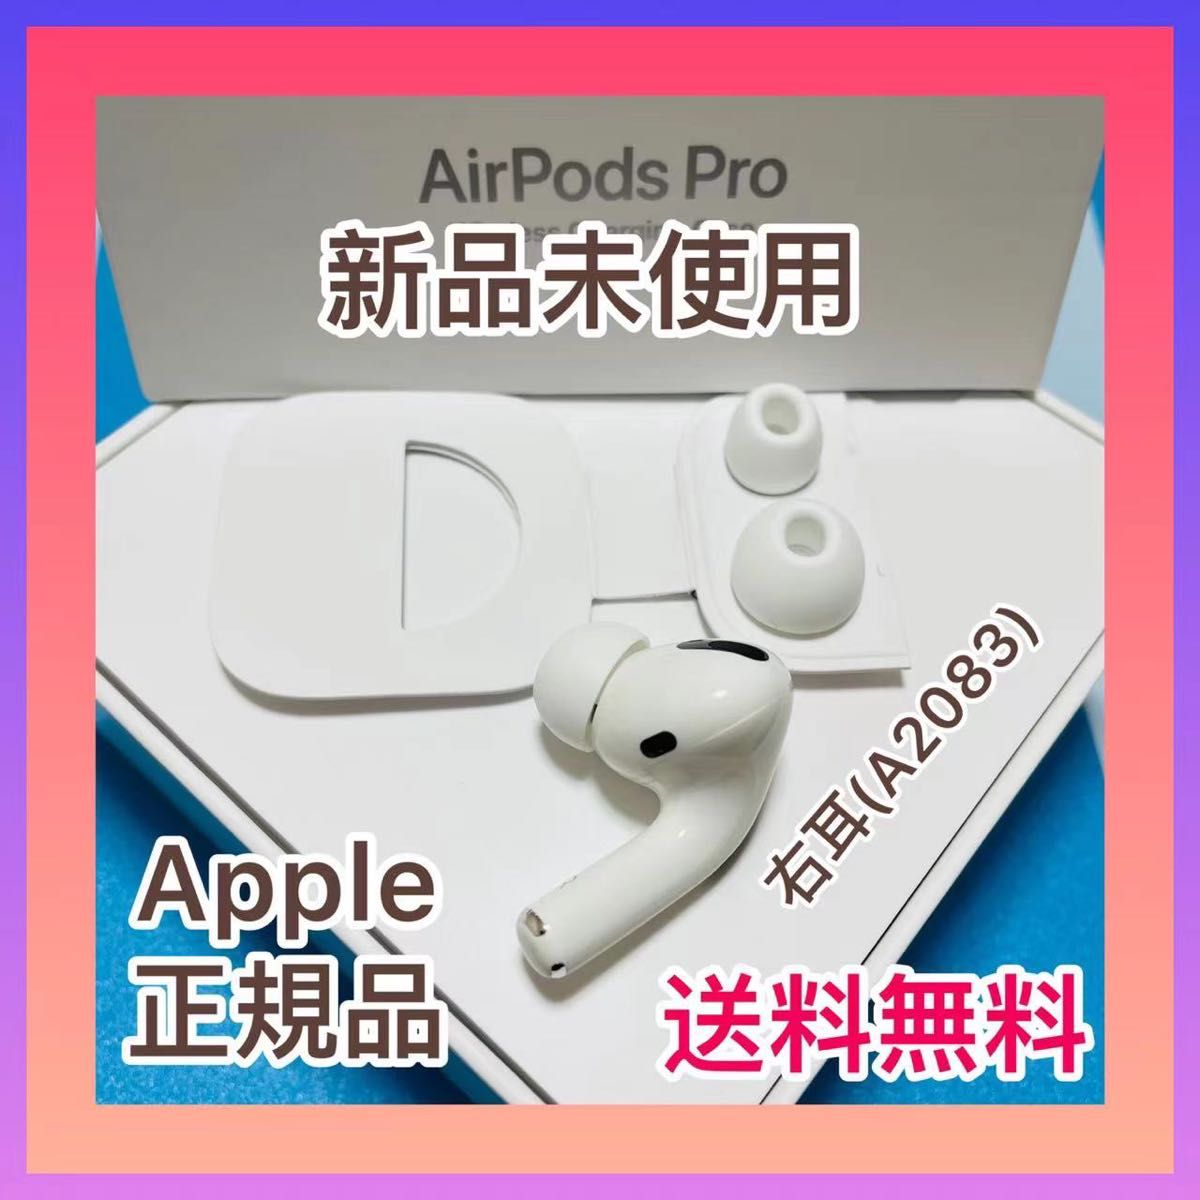 Apple AirPods Pro Apple 正規品 第一世代 右耳 R片耳のみ｜PayPayフリマ